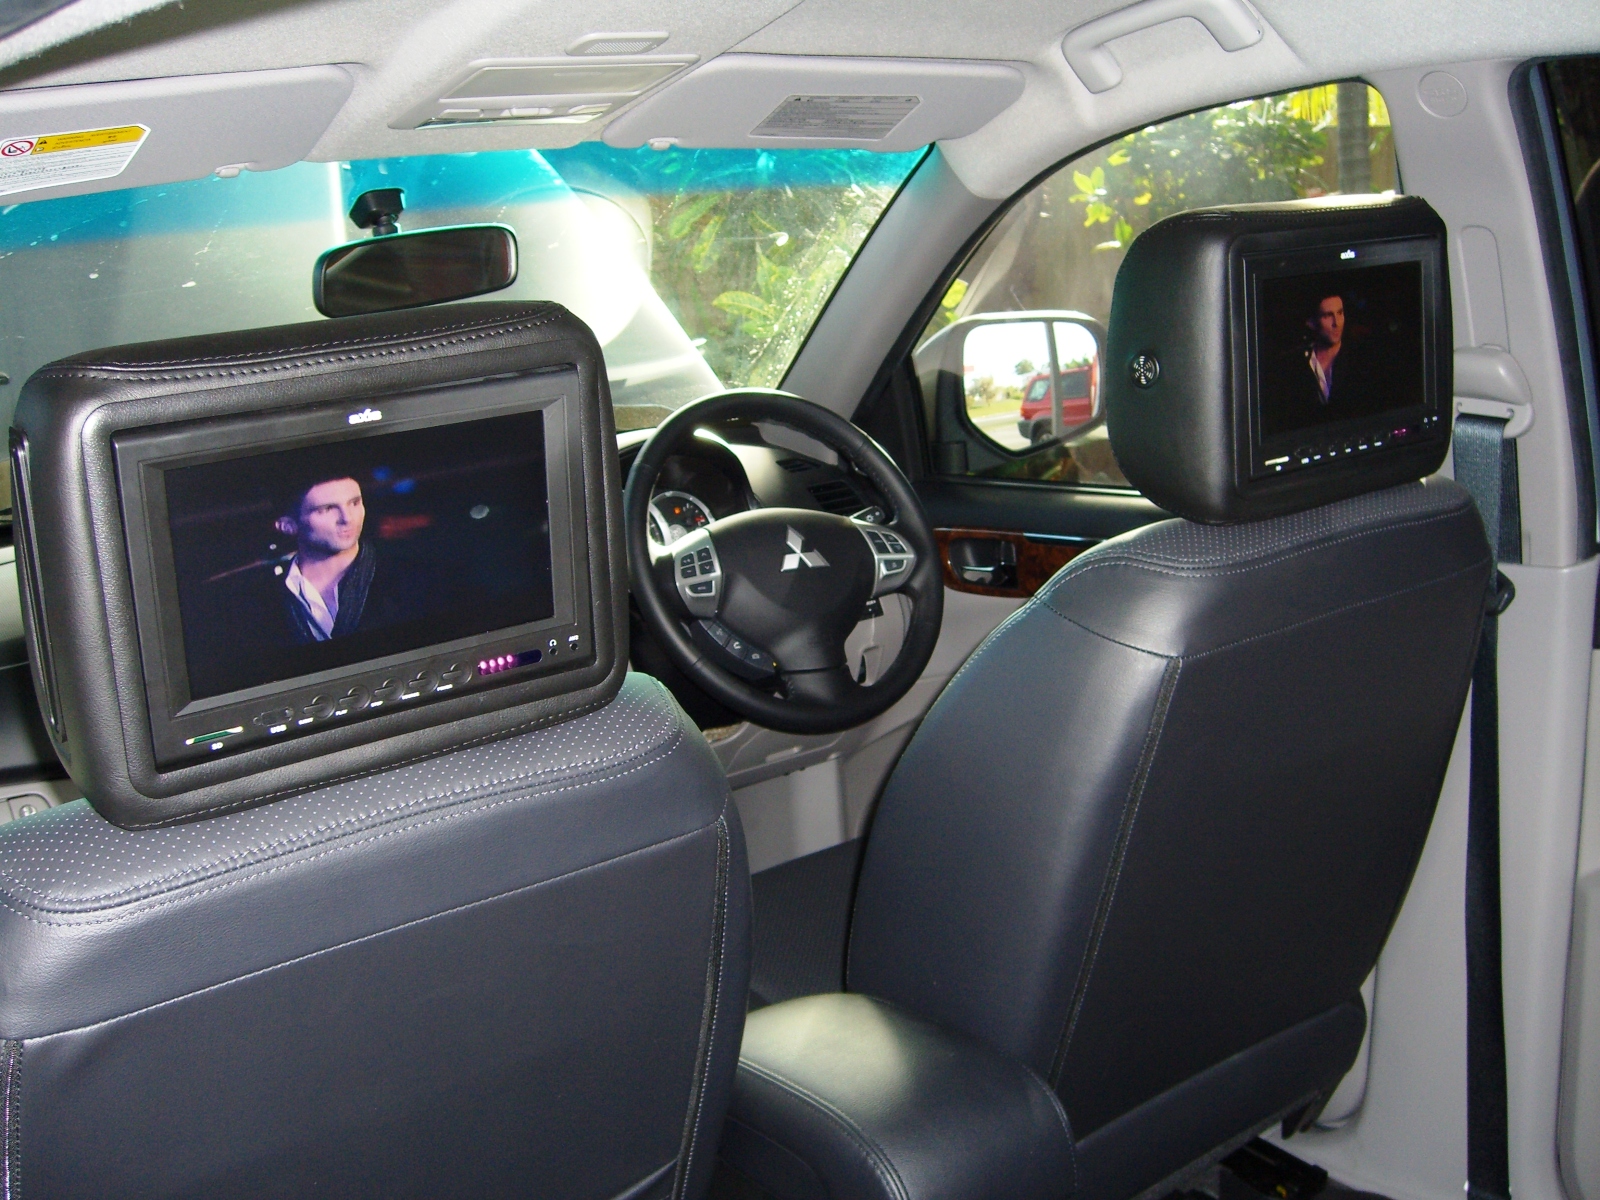 Mitsubishi Challenger 2010 rear seat 8inch DVD screens